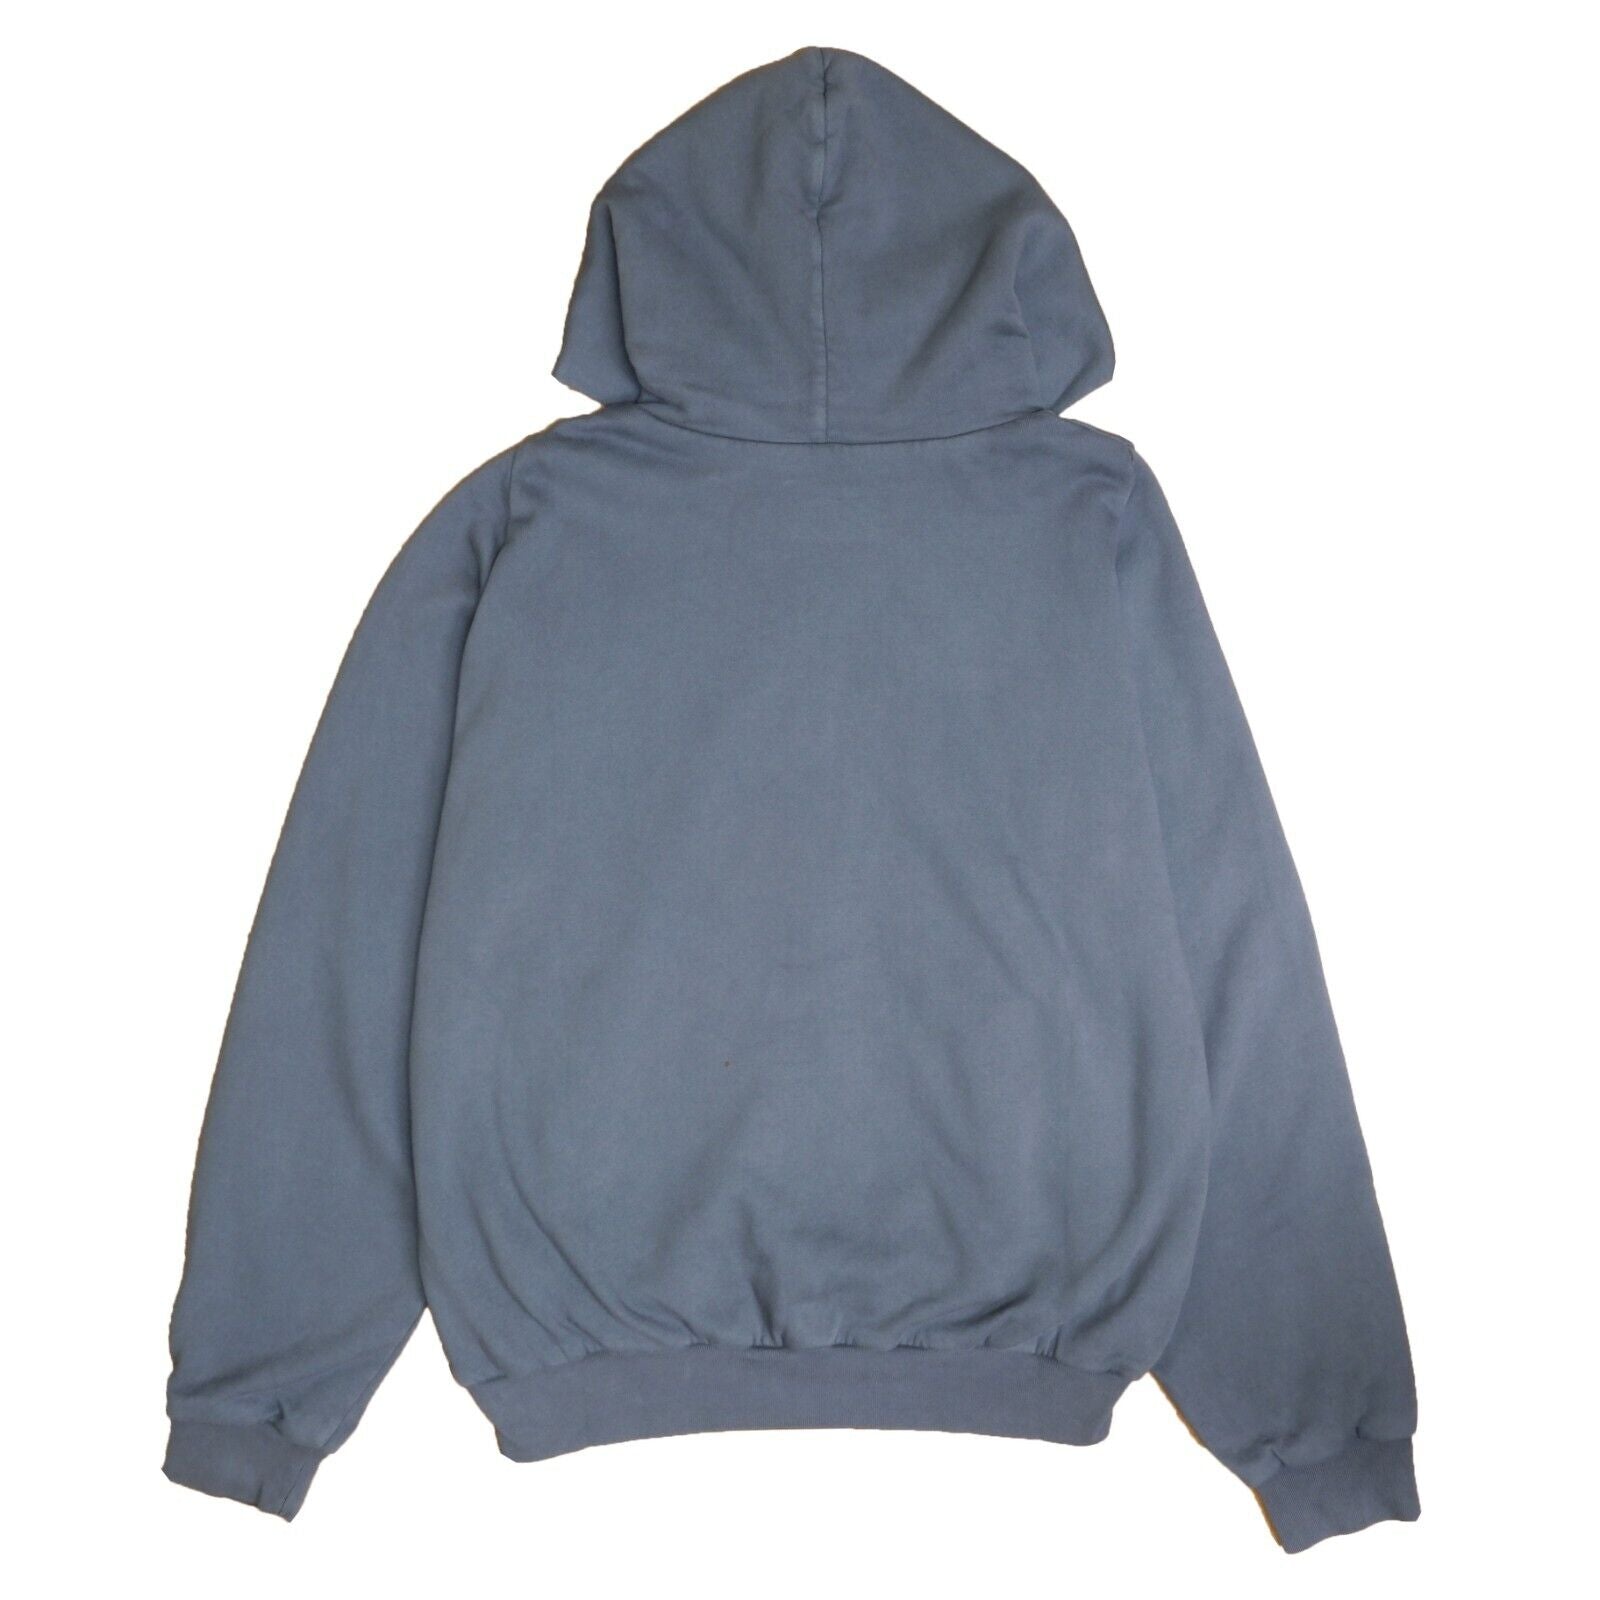 Yeezy Gap Unreleased Zip Sweatshirt Hoodie Size Large Dark Gray